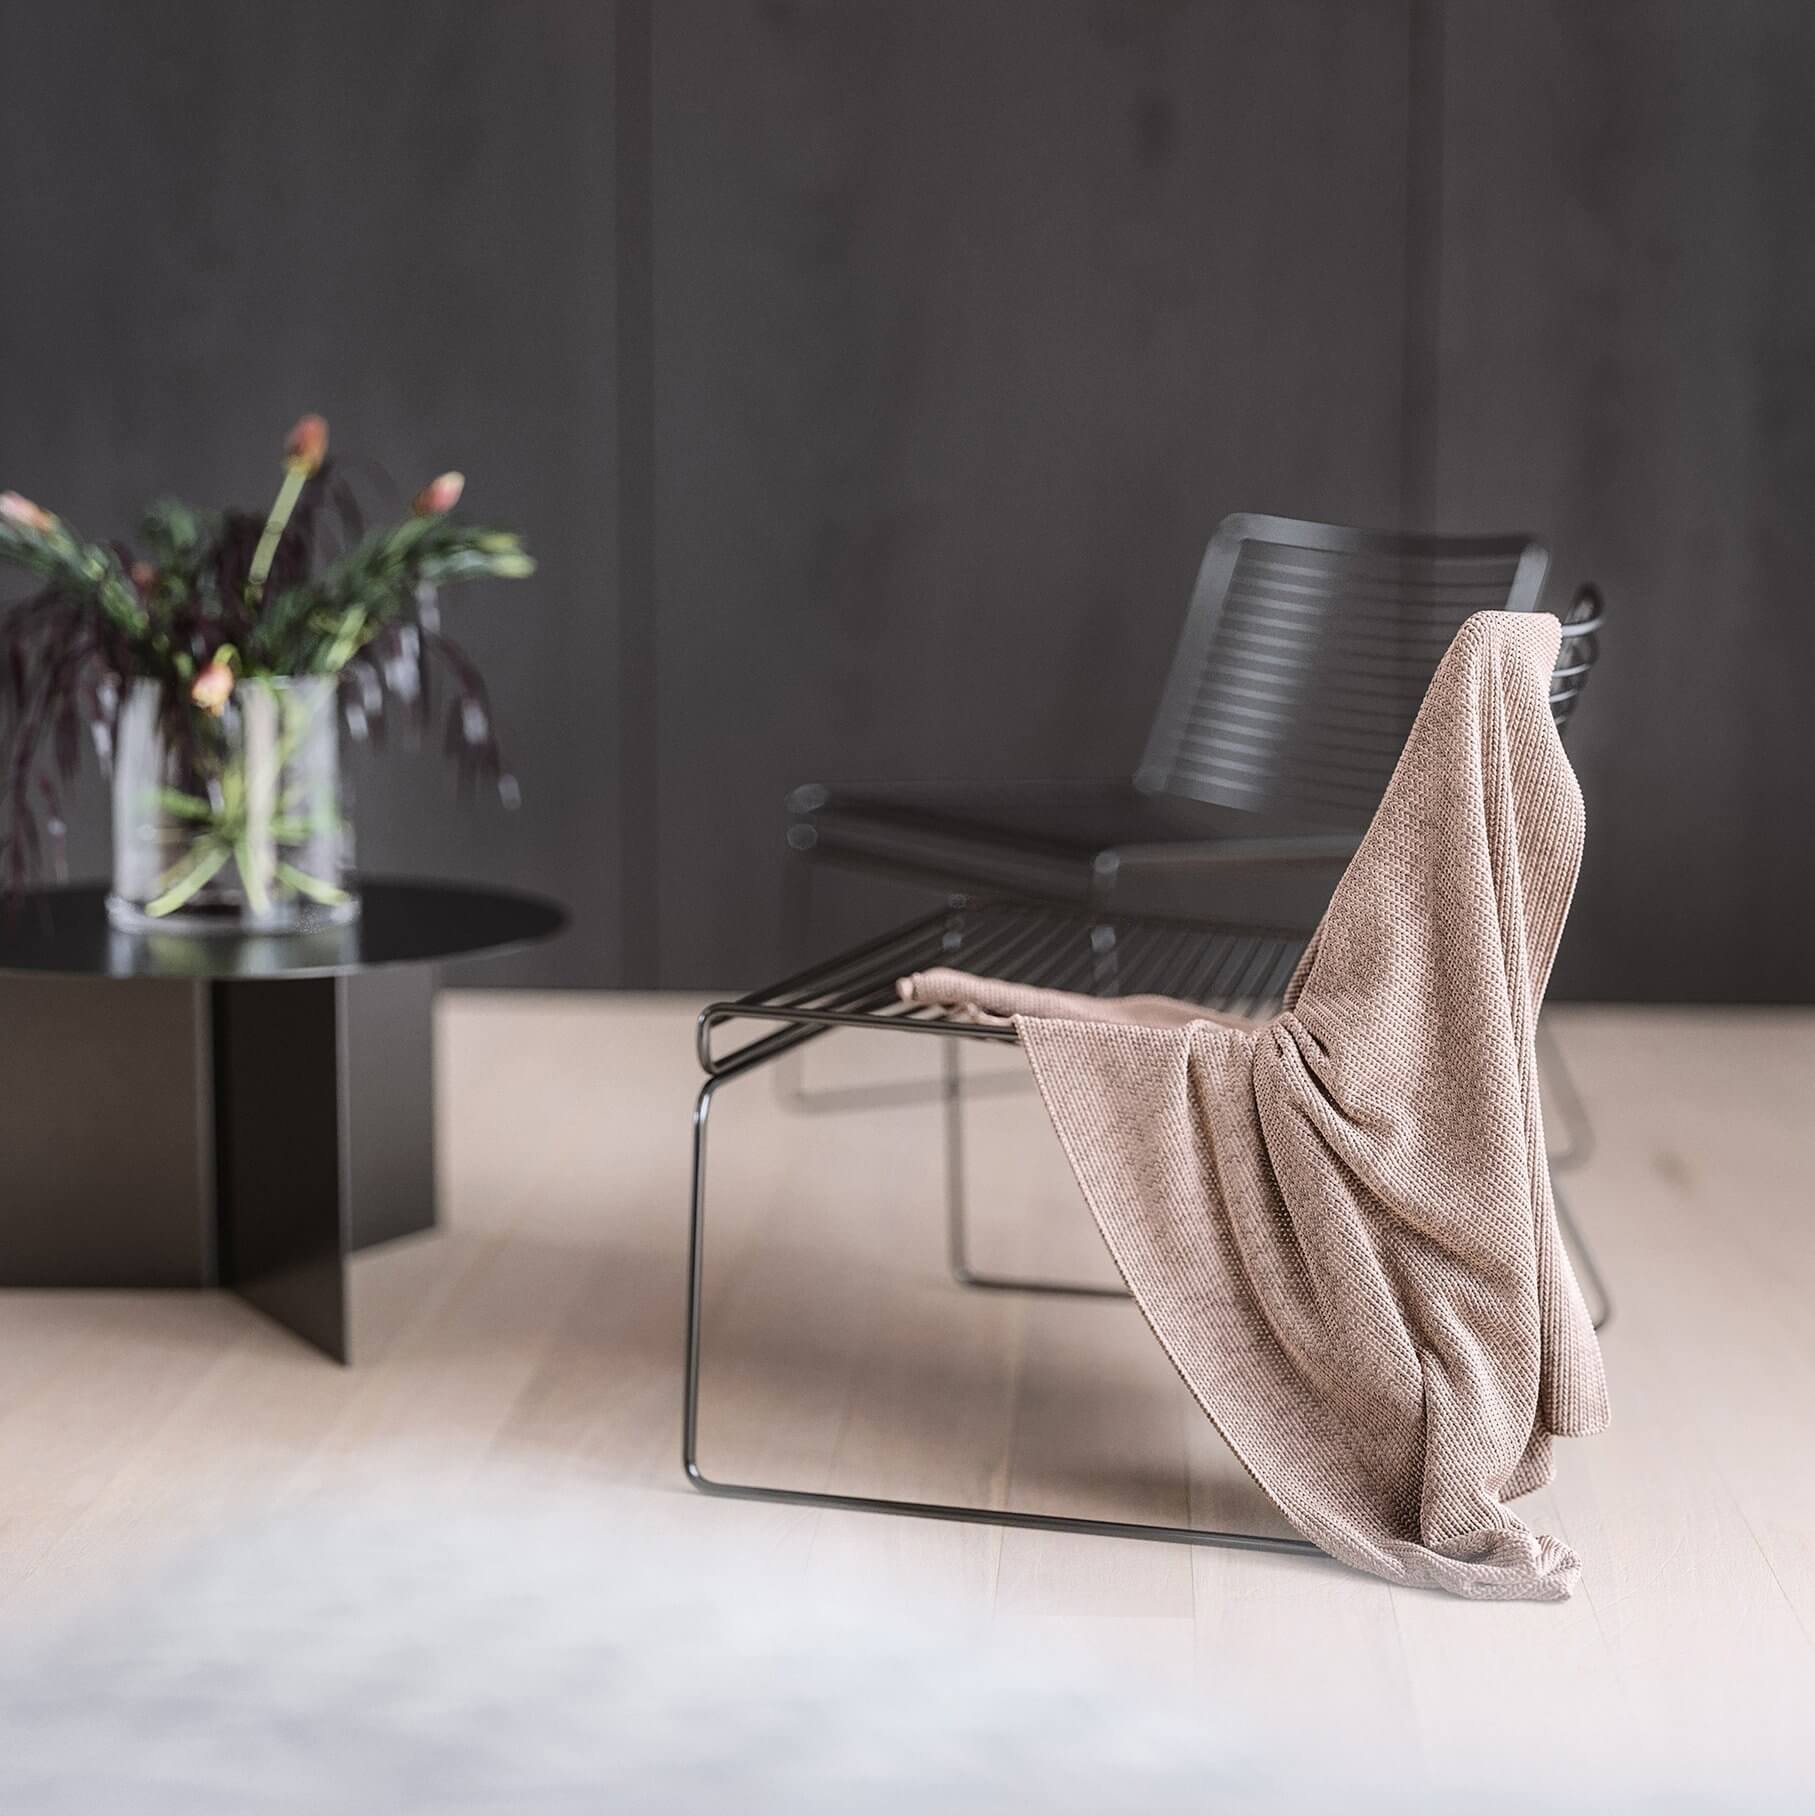 Mánesova Designer Apartment lounge area wire chairs blankets - cgi visualization